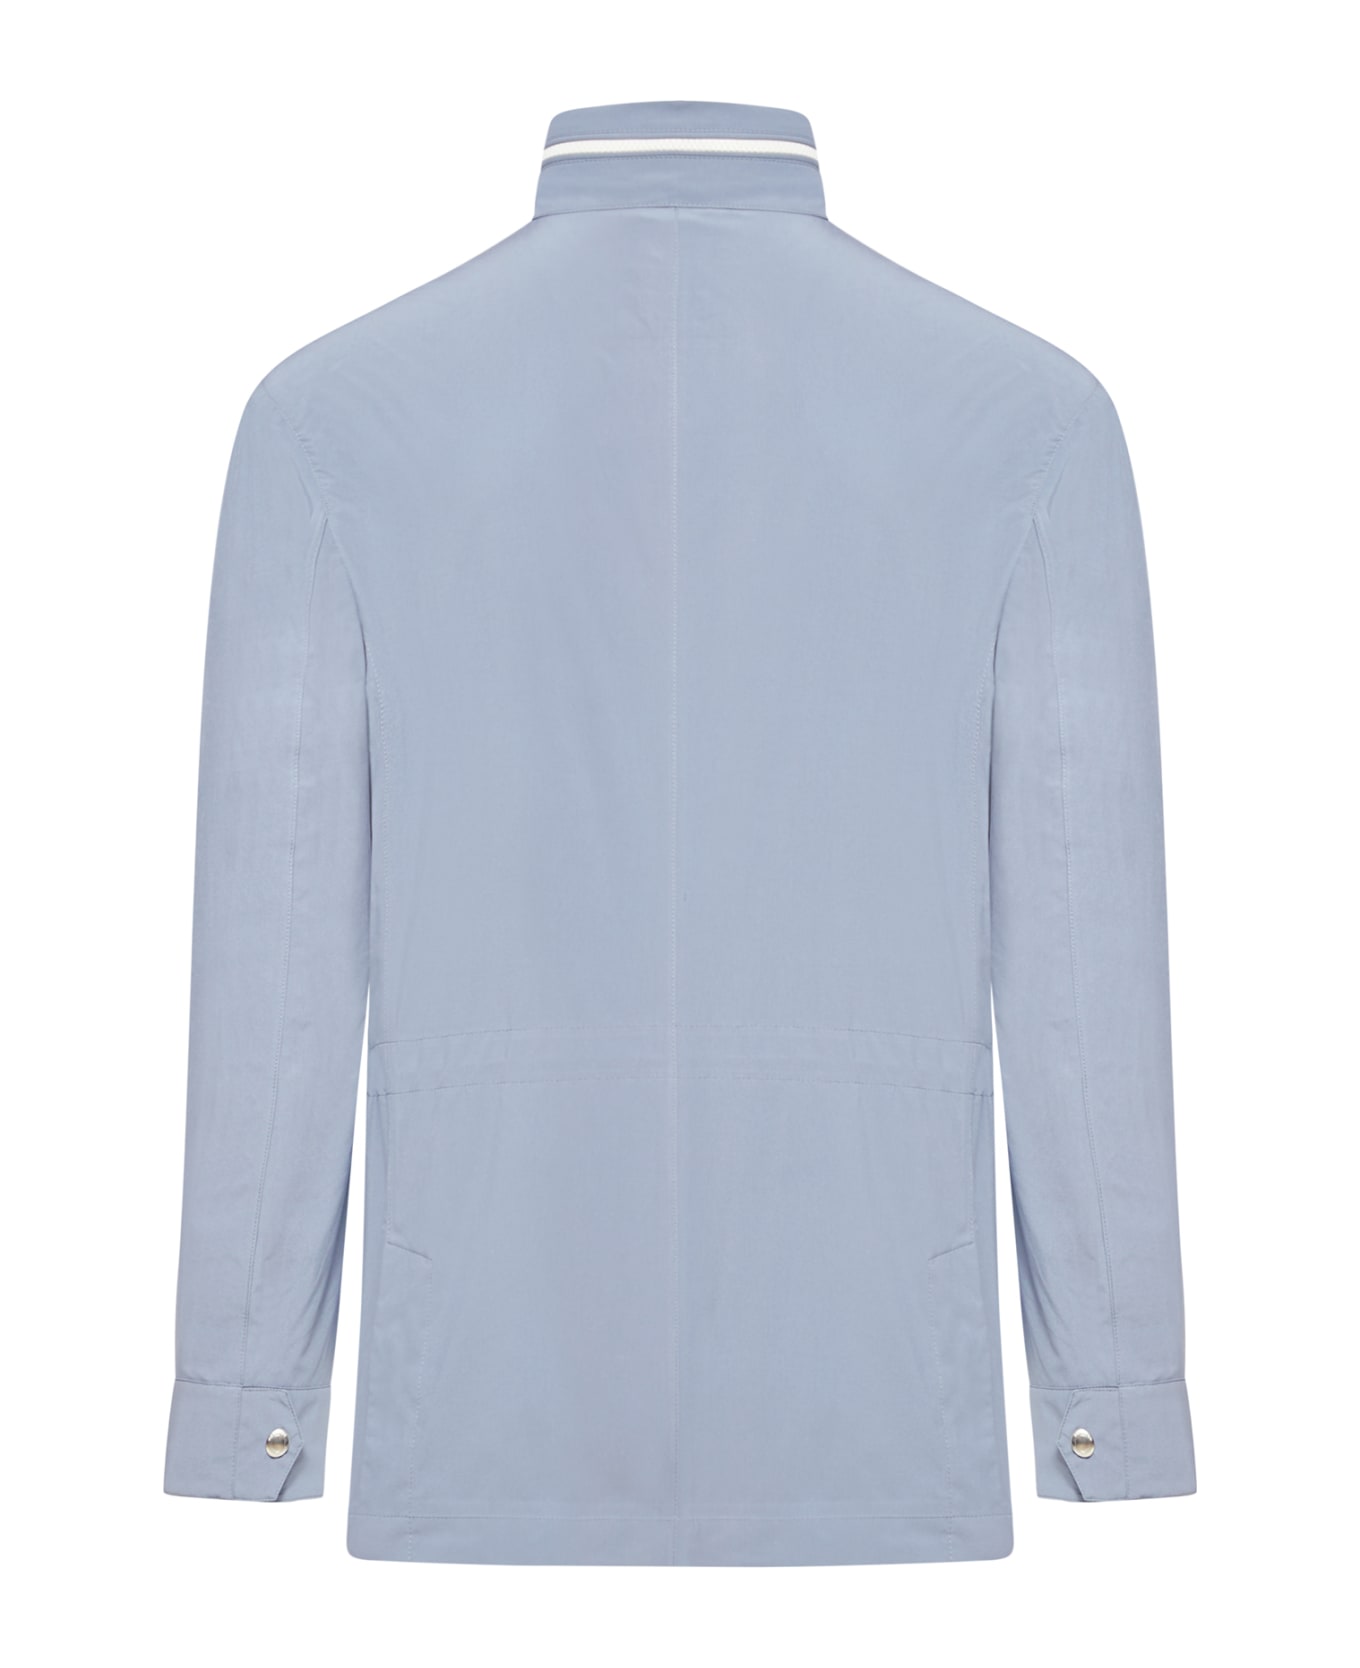 Brunello Cucinelli Jacket Water Resistant - Medium Blue